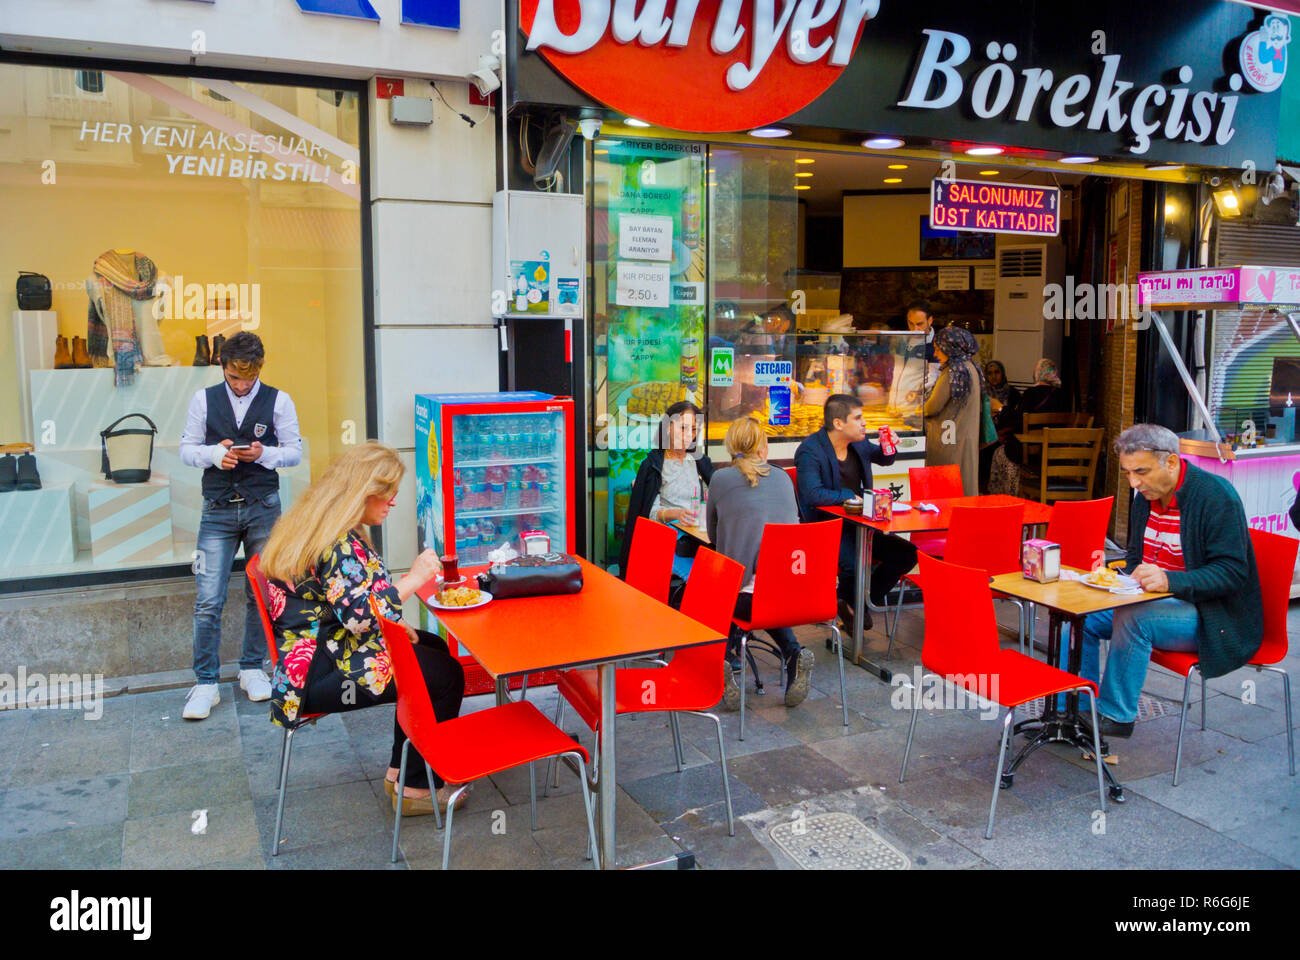 Borekcisi, fast food place serve borek, pasta ripiena, Fatih, Istanbul, Turchia, Eurasia Foto Stock